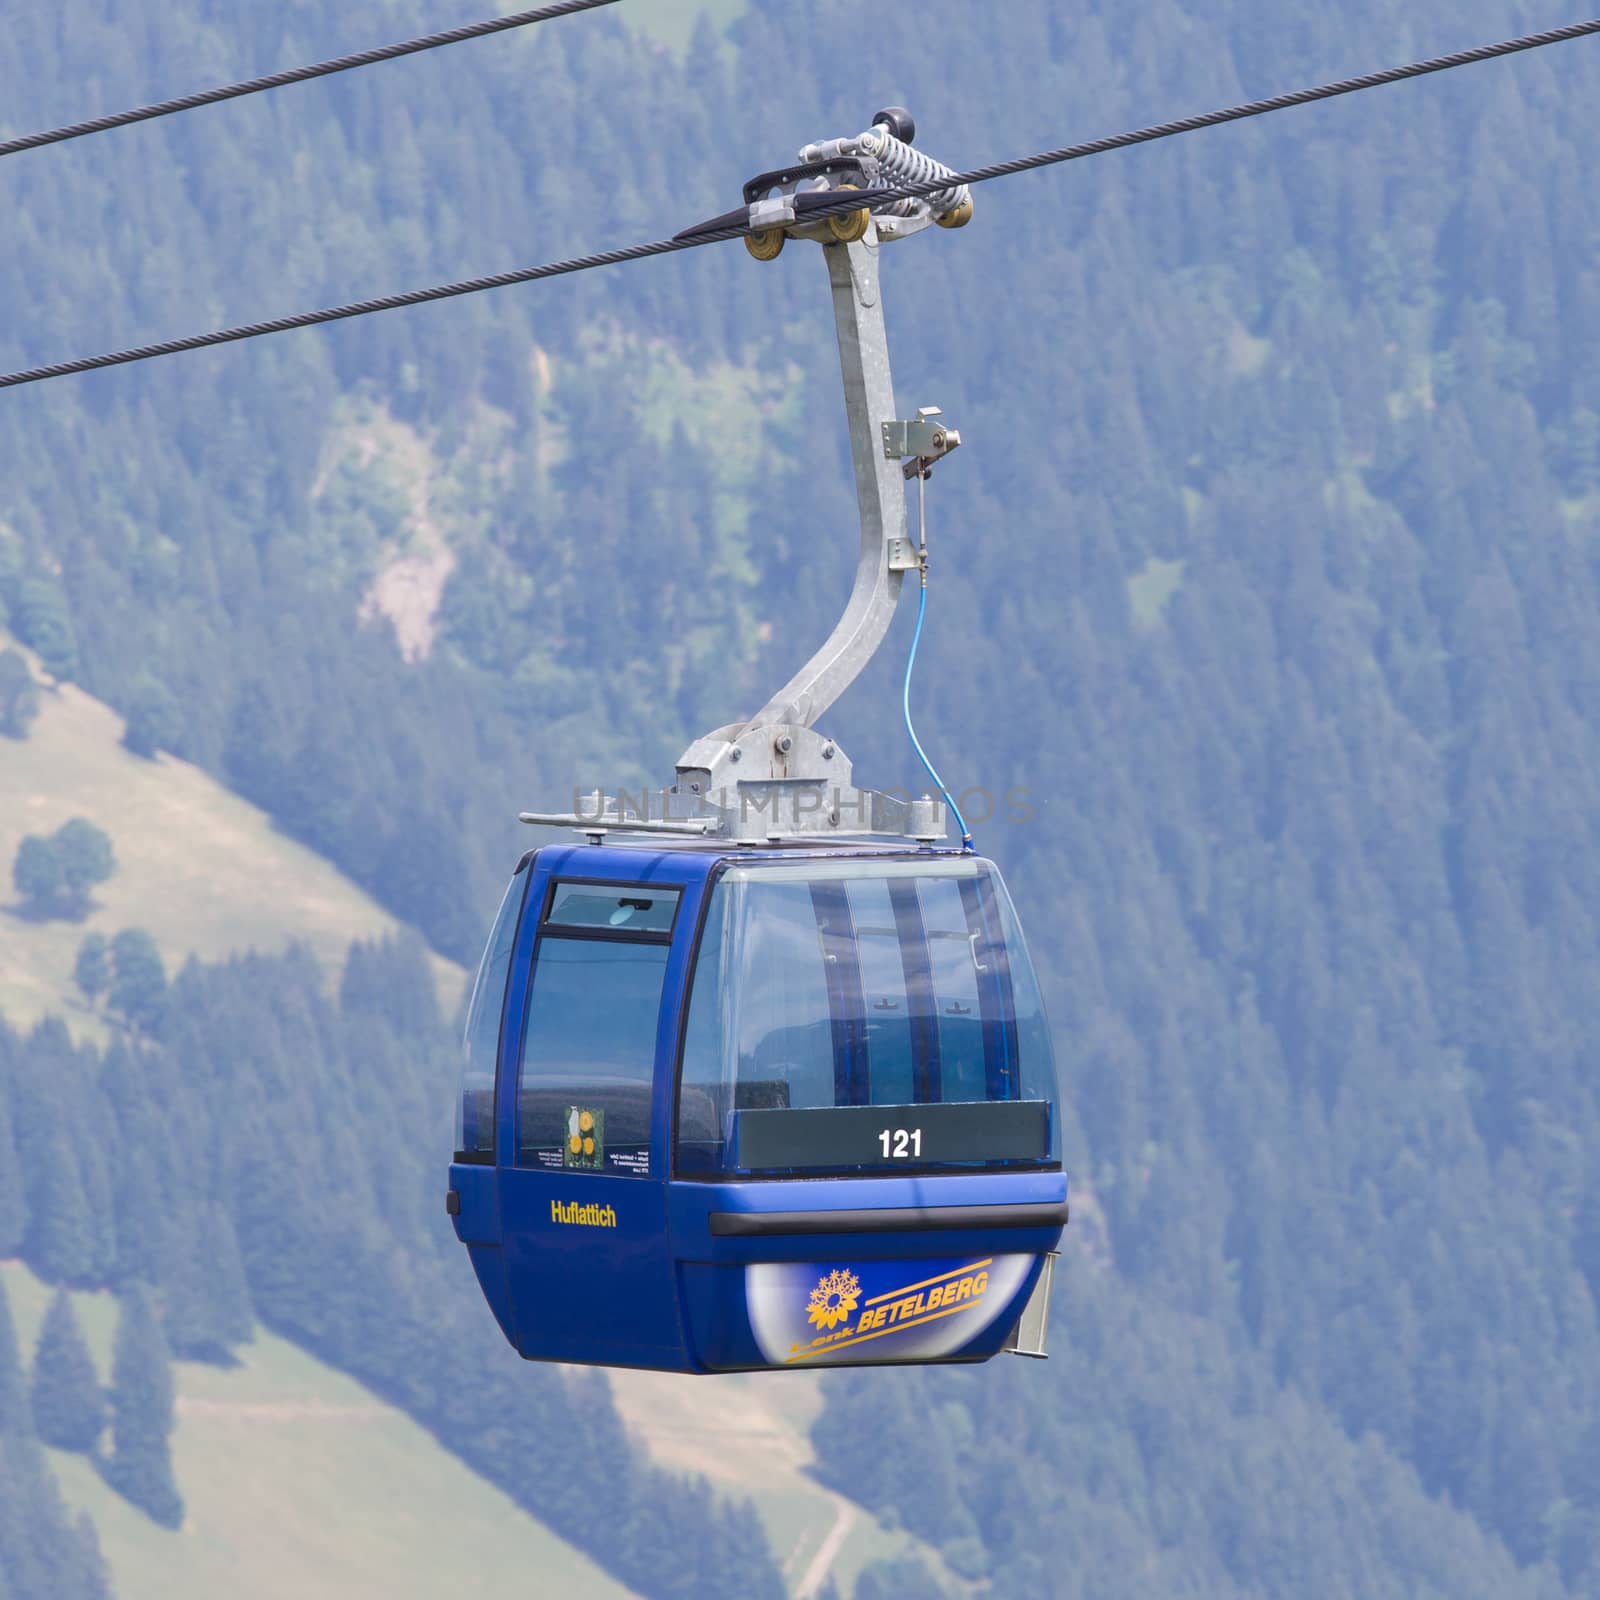 Lenk im Simmental, Switzerland - July 12, 2015: Ski lift in moun by michaklootwijk